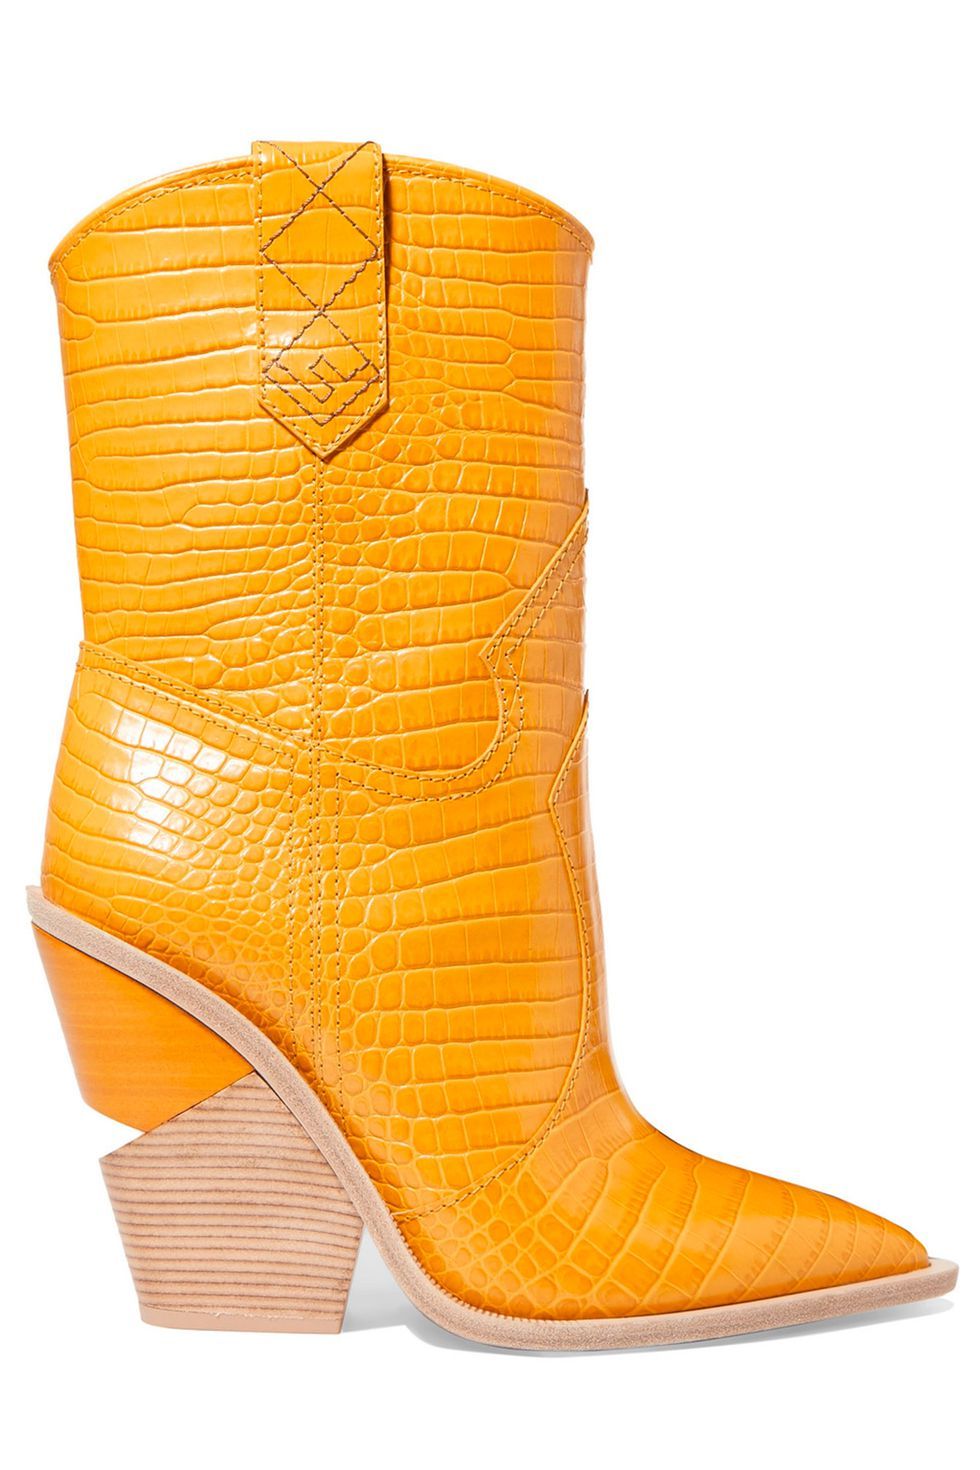 Footwear, Yellow, Boot, Shoe, Orange, Cowboy boot, High heels, Durango boot, 